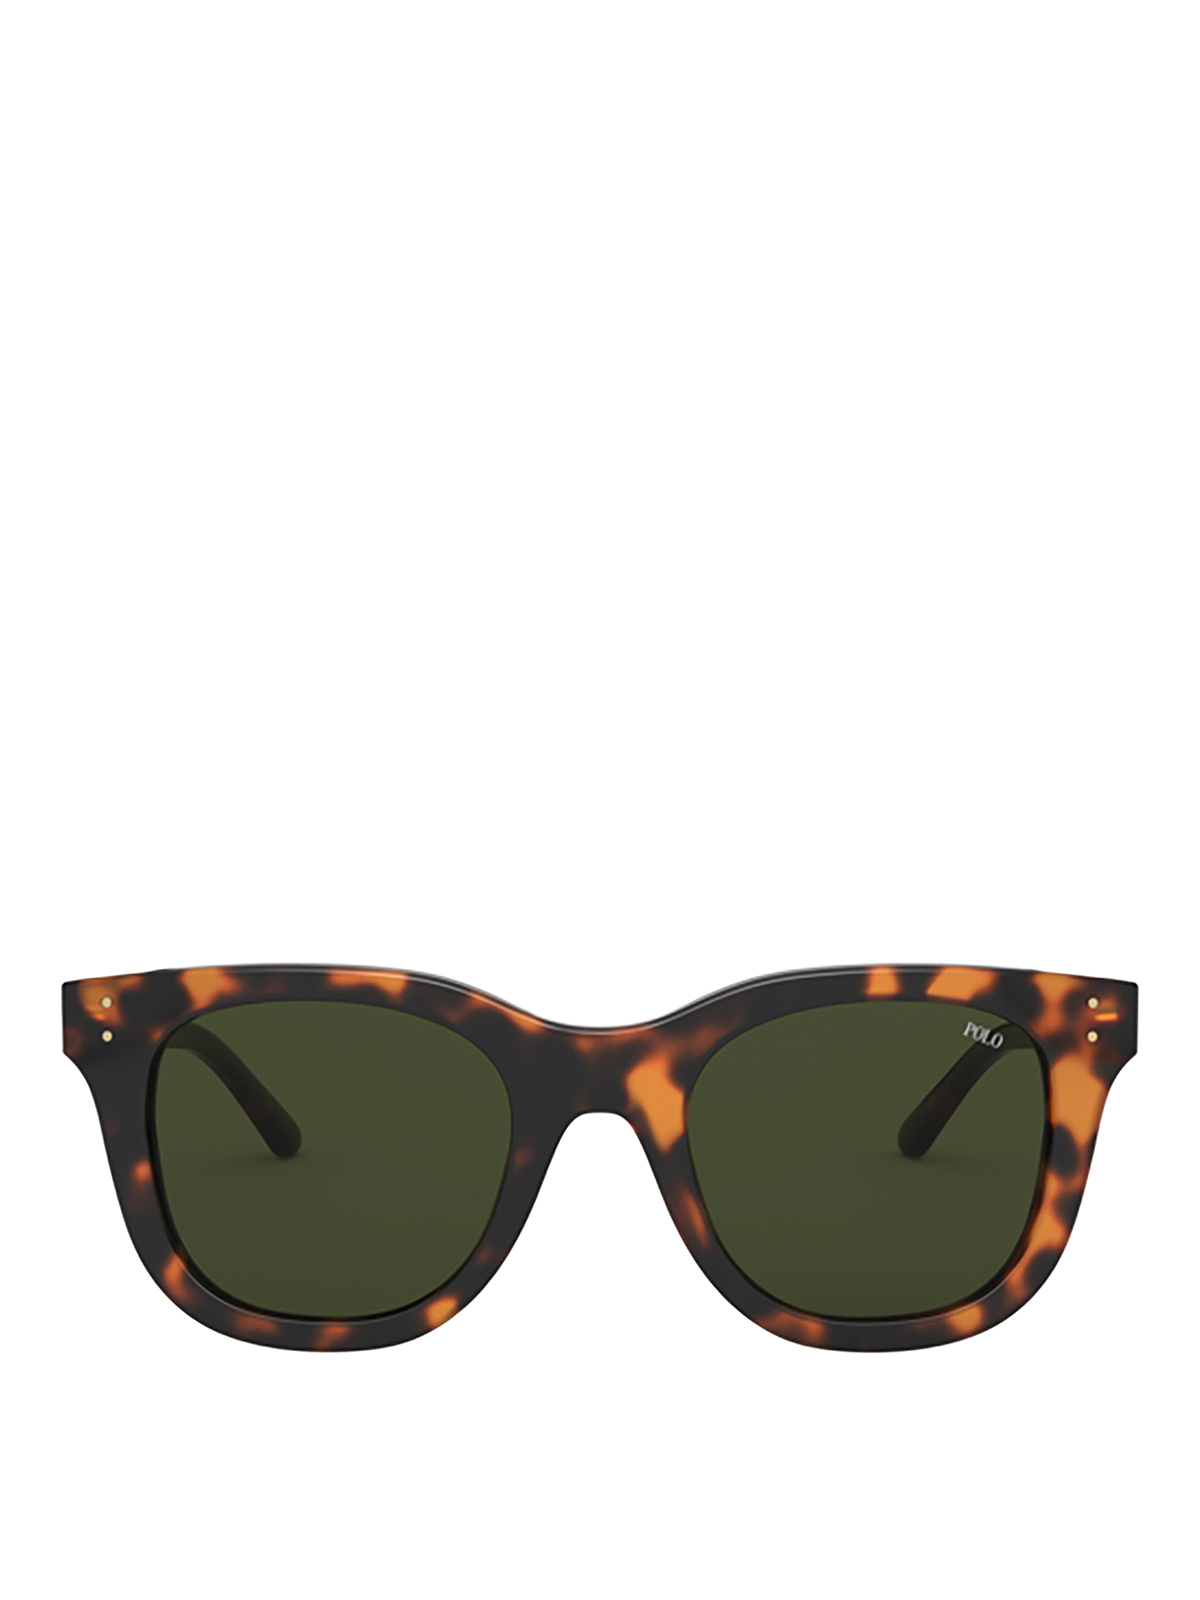 wayfarer sunglasses online